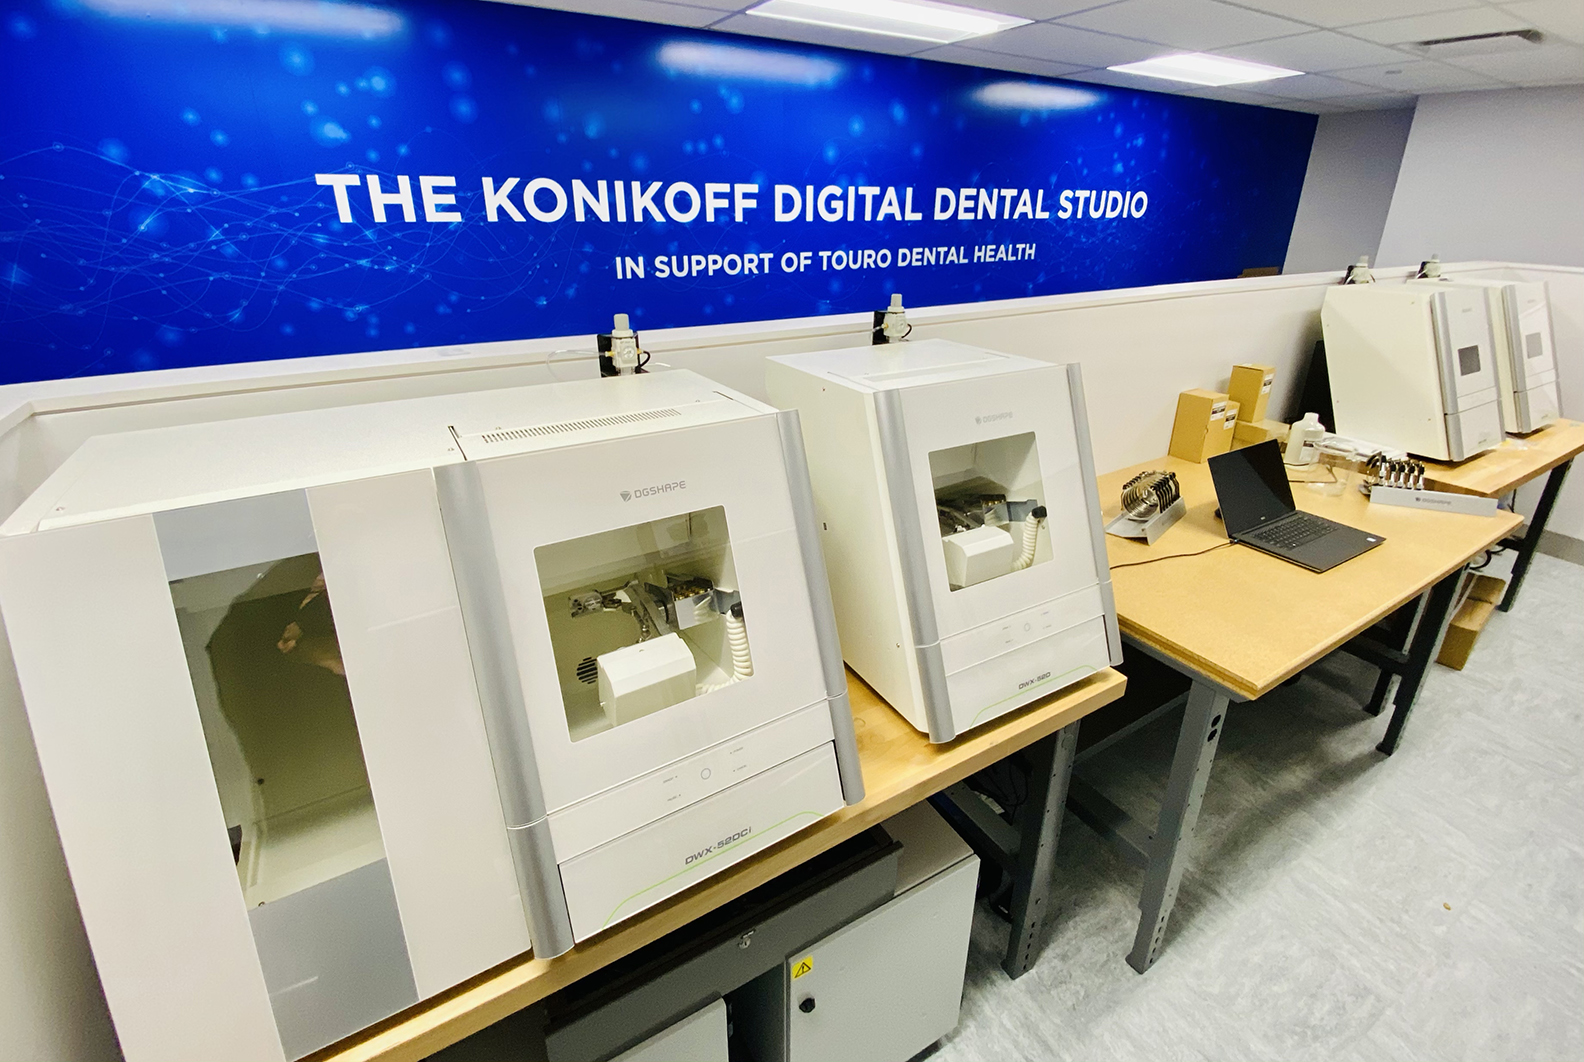 The Konikoff Digital Dental Studio